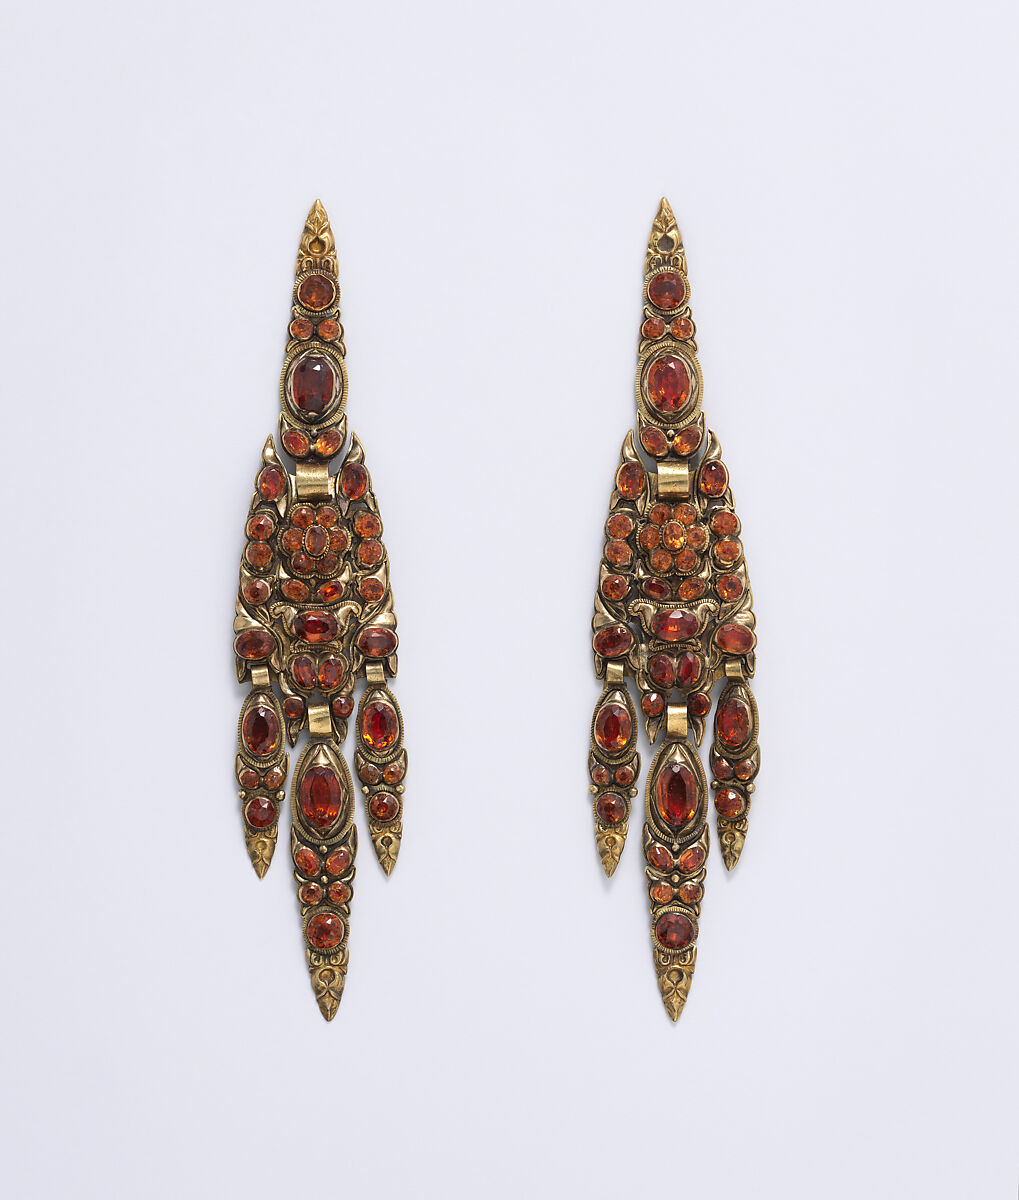 Pair of earrings, B. A. (of Spain), Gold, jacinths (?), Spanish 